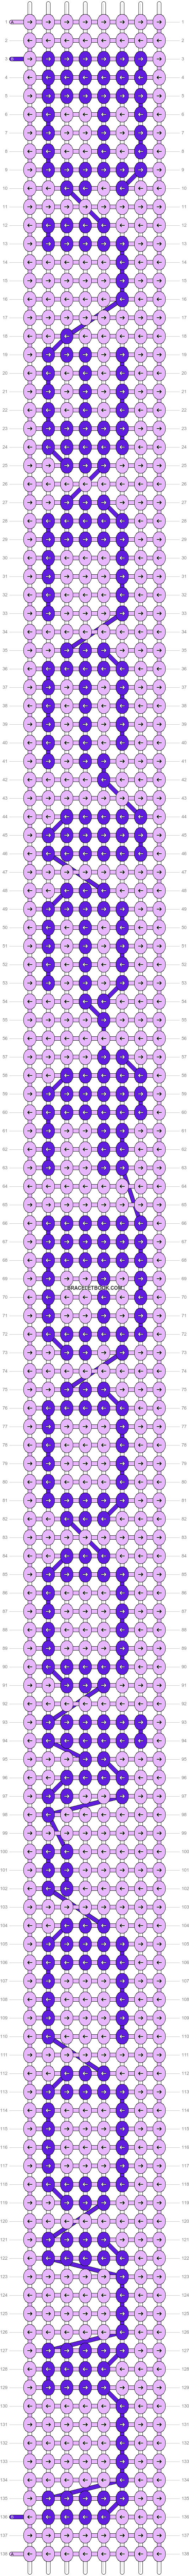 Alpha pattern #510 variation #209066 pattern